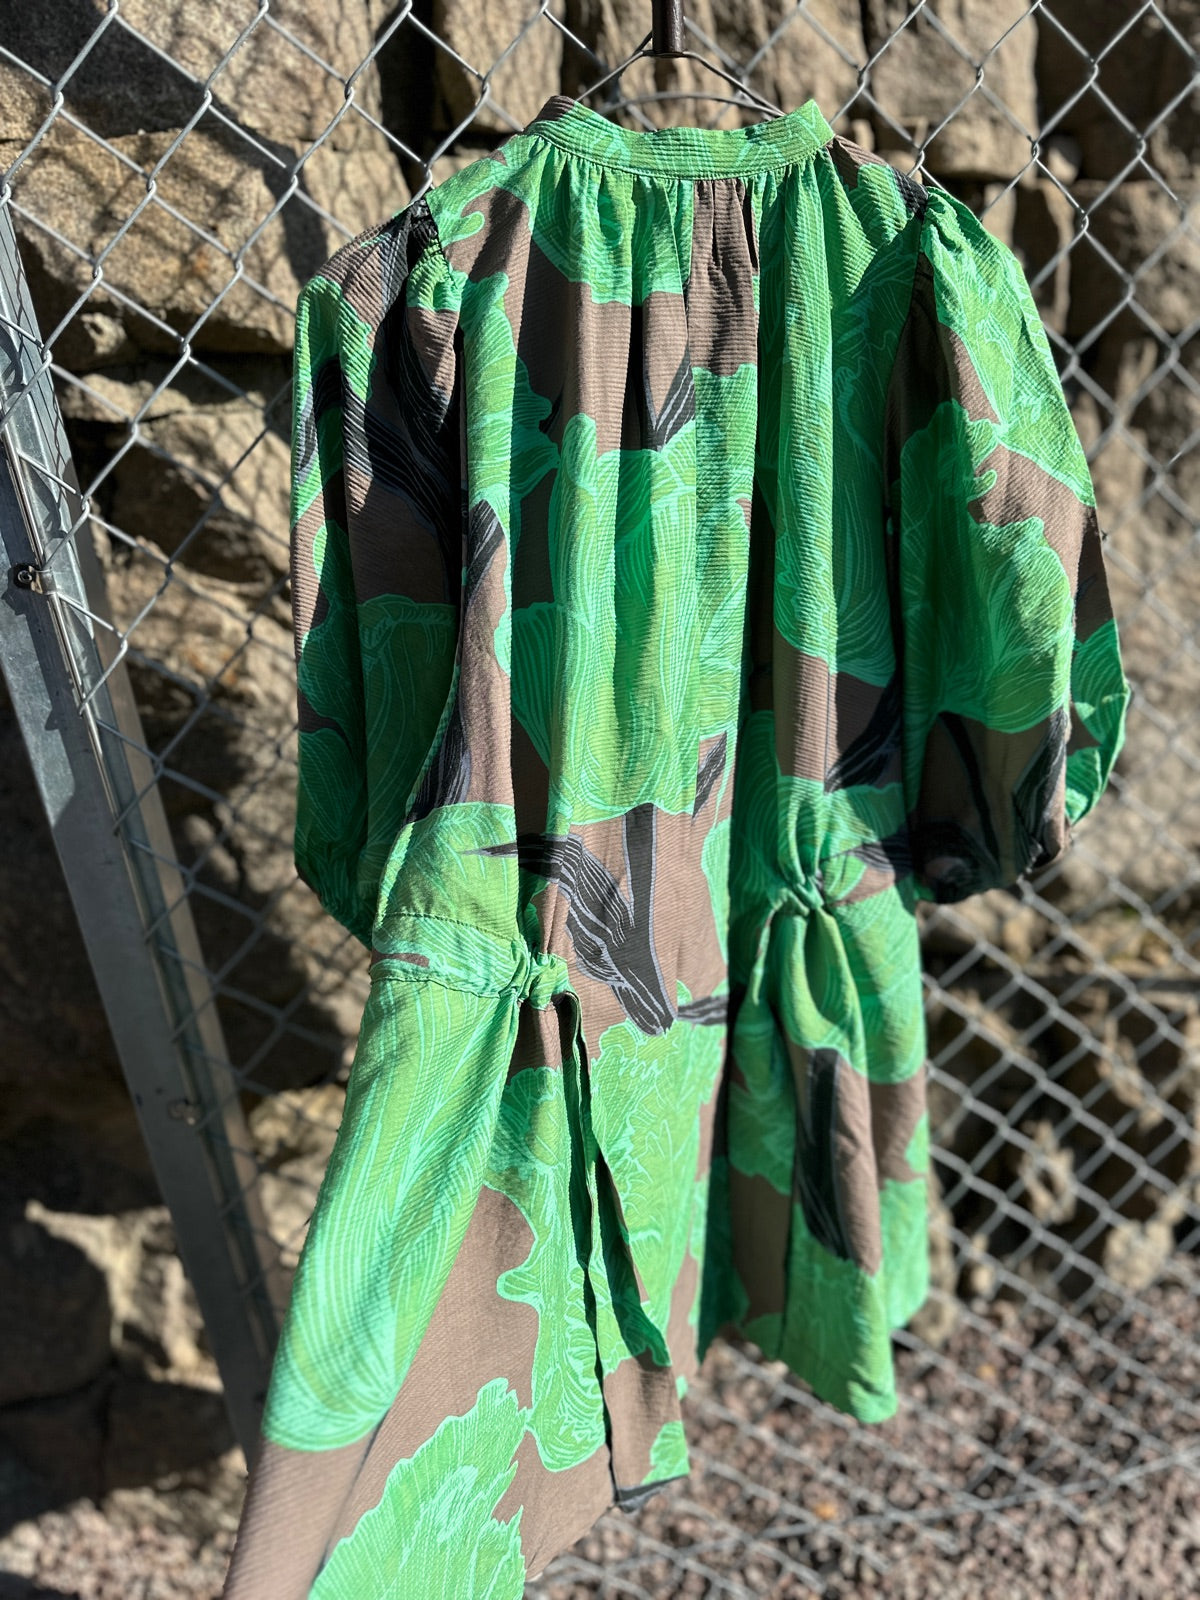 Objribini Short Dress Fossil Fair Green